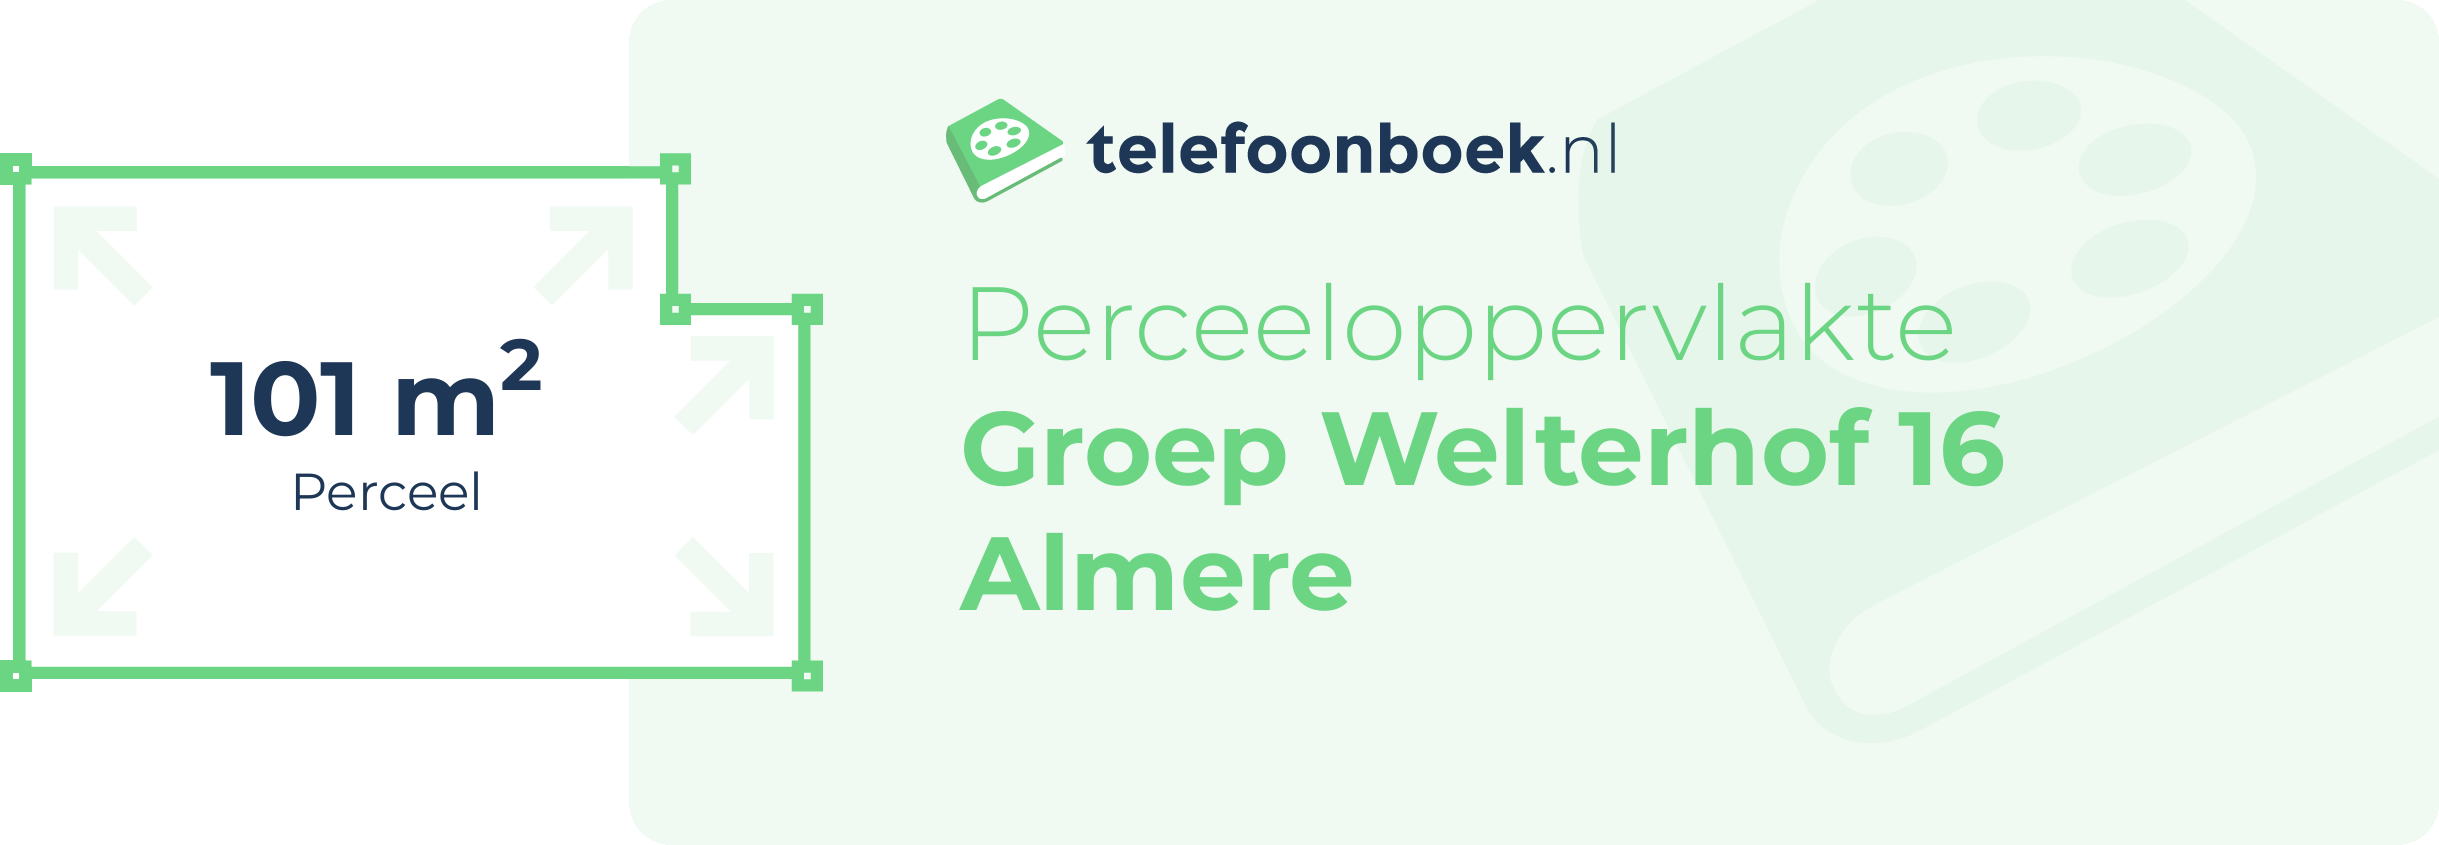 Perceeloppervlakte Groep Welterhof 16 Almere